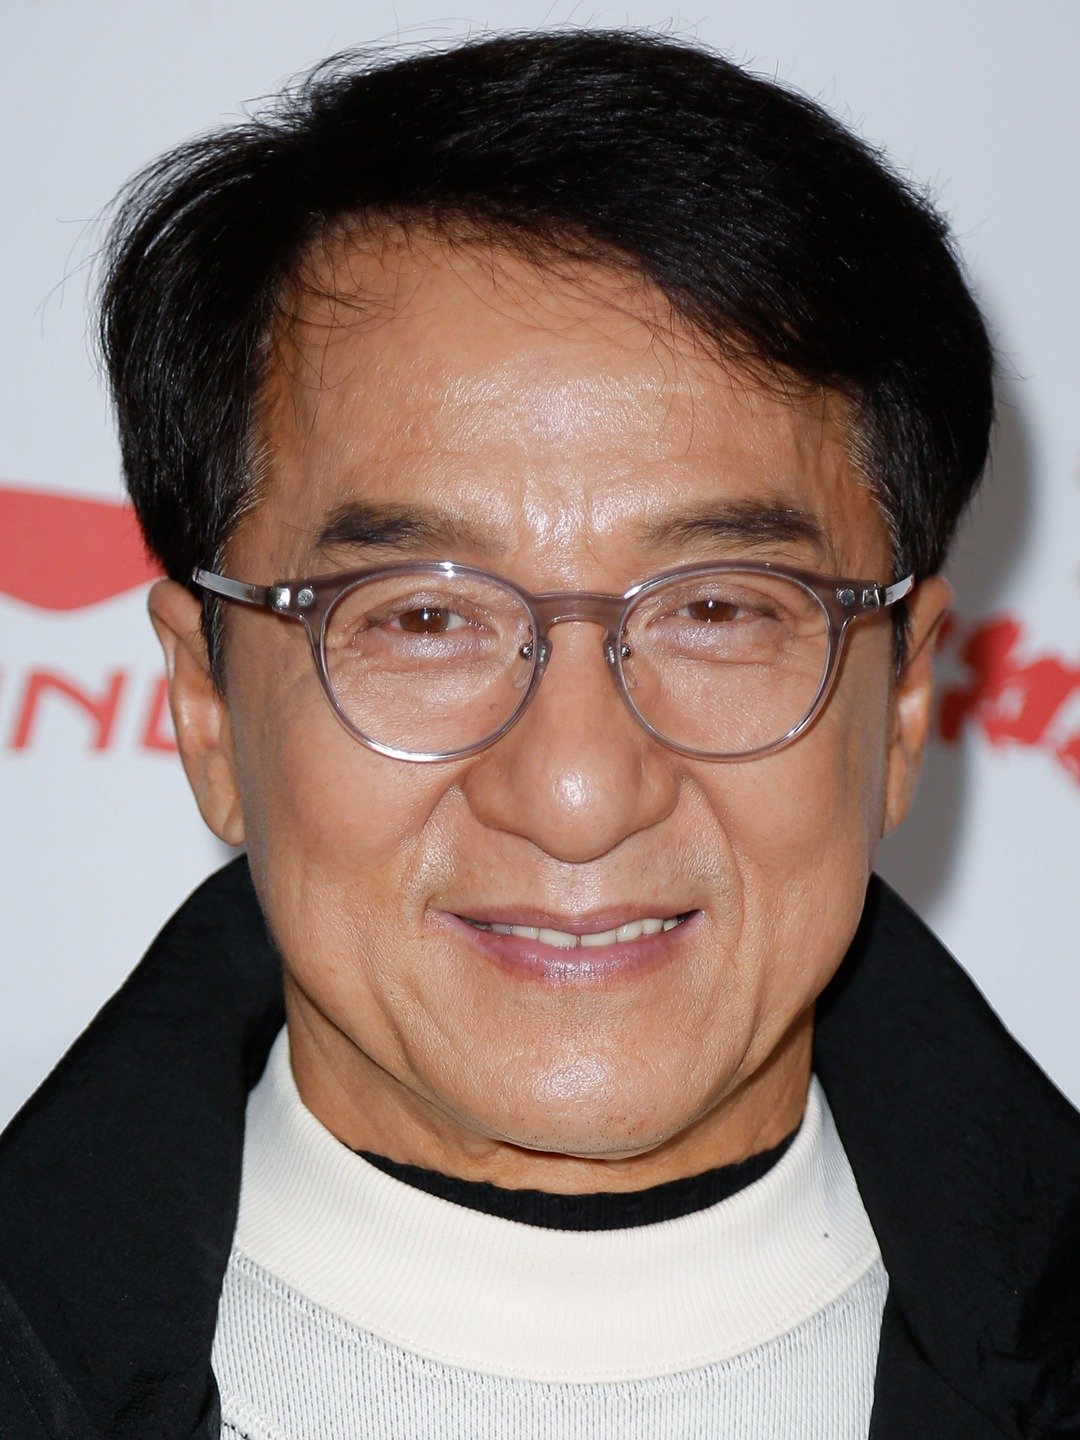 Jackie Chan - Actor, Martial Artist, Director, Stunt Performer